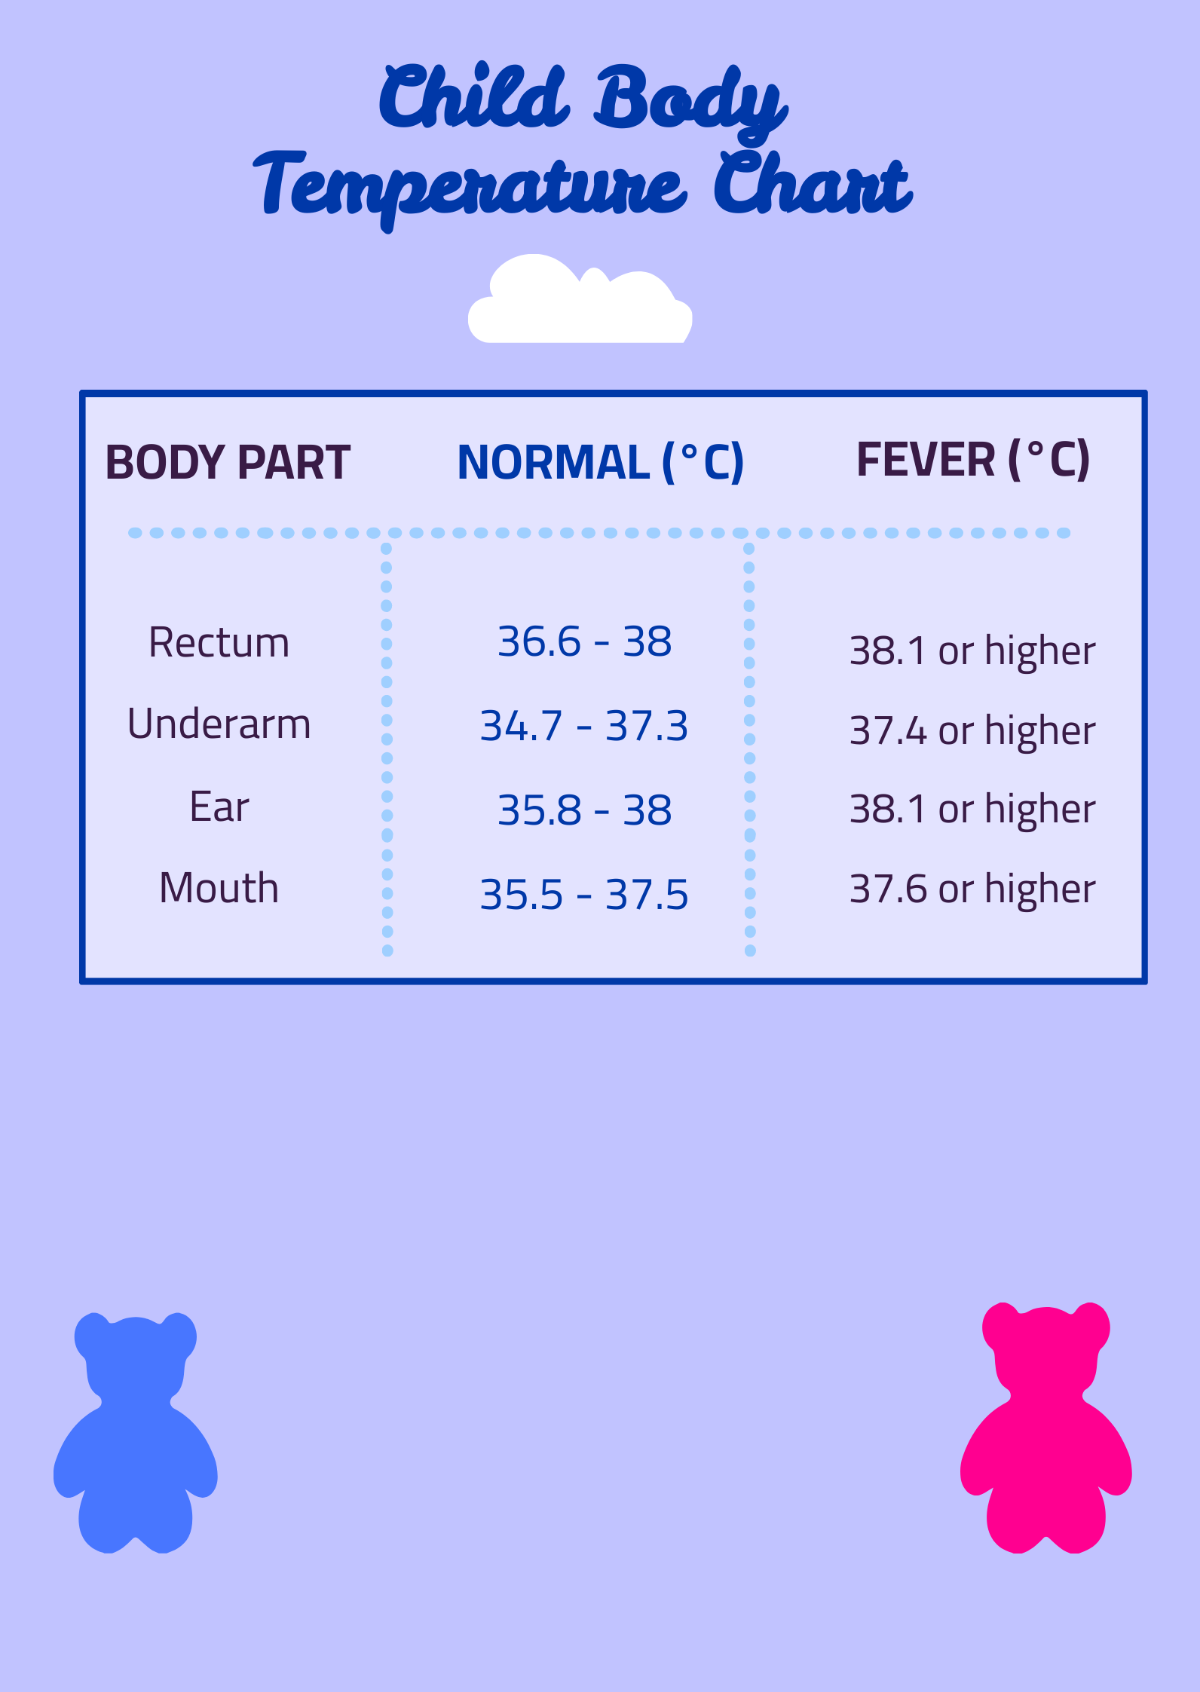 Child Body Temperature Chart Template